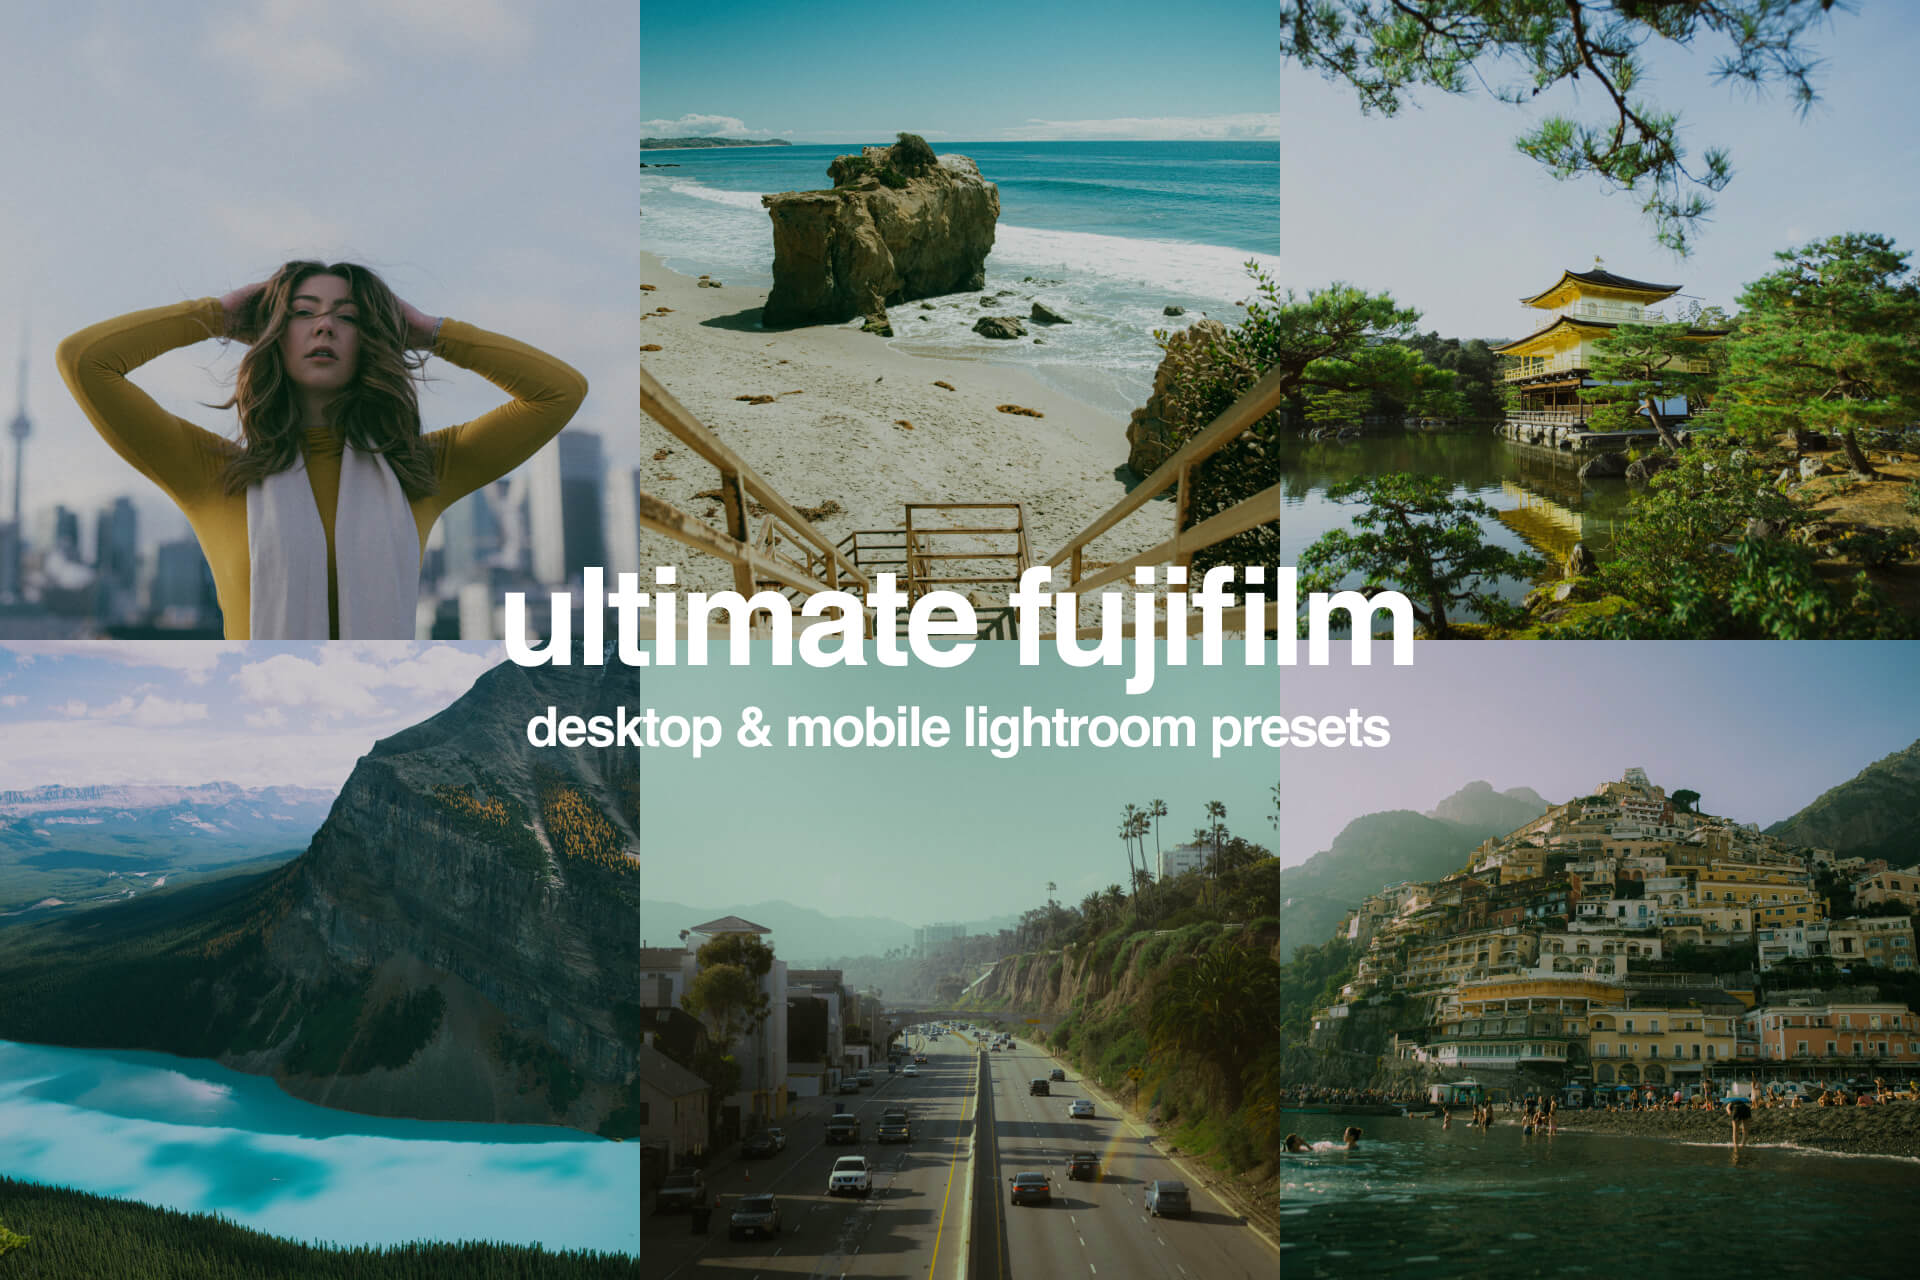 Ultimate Fujifilm Lightroom Pack